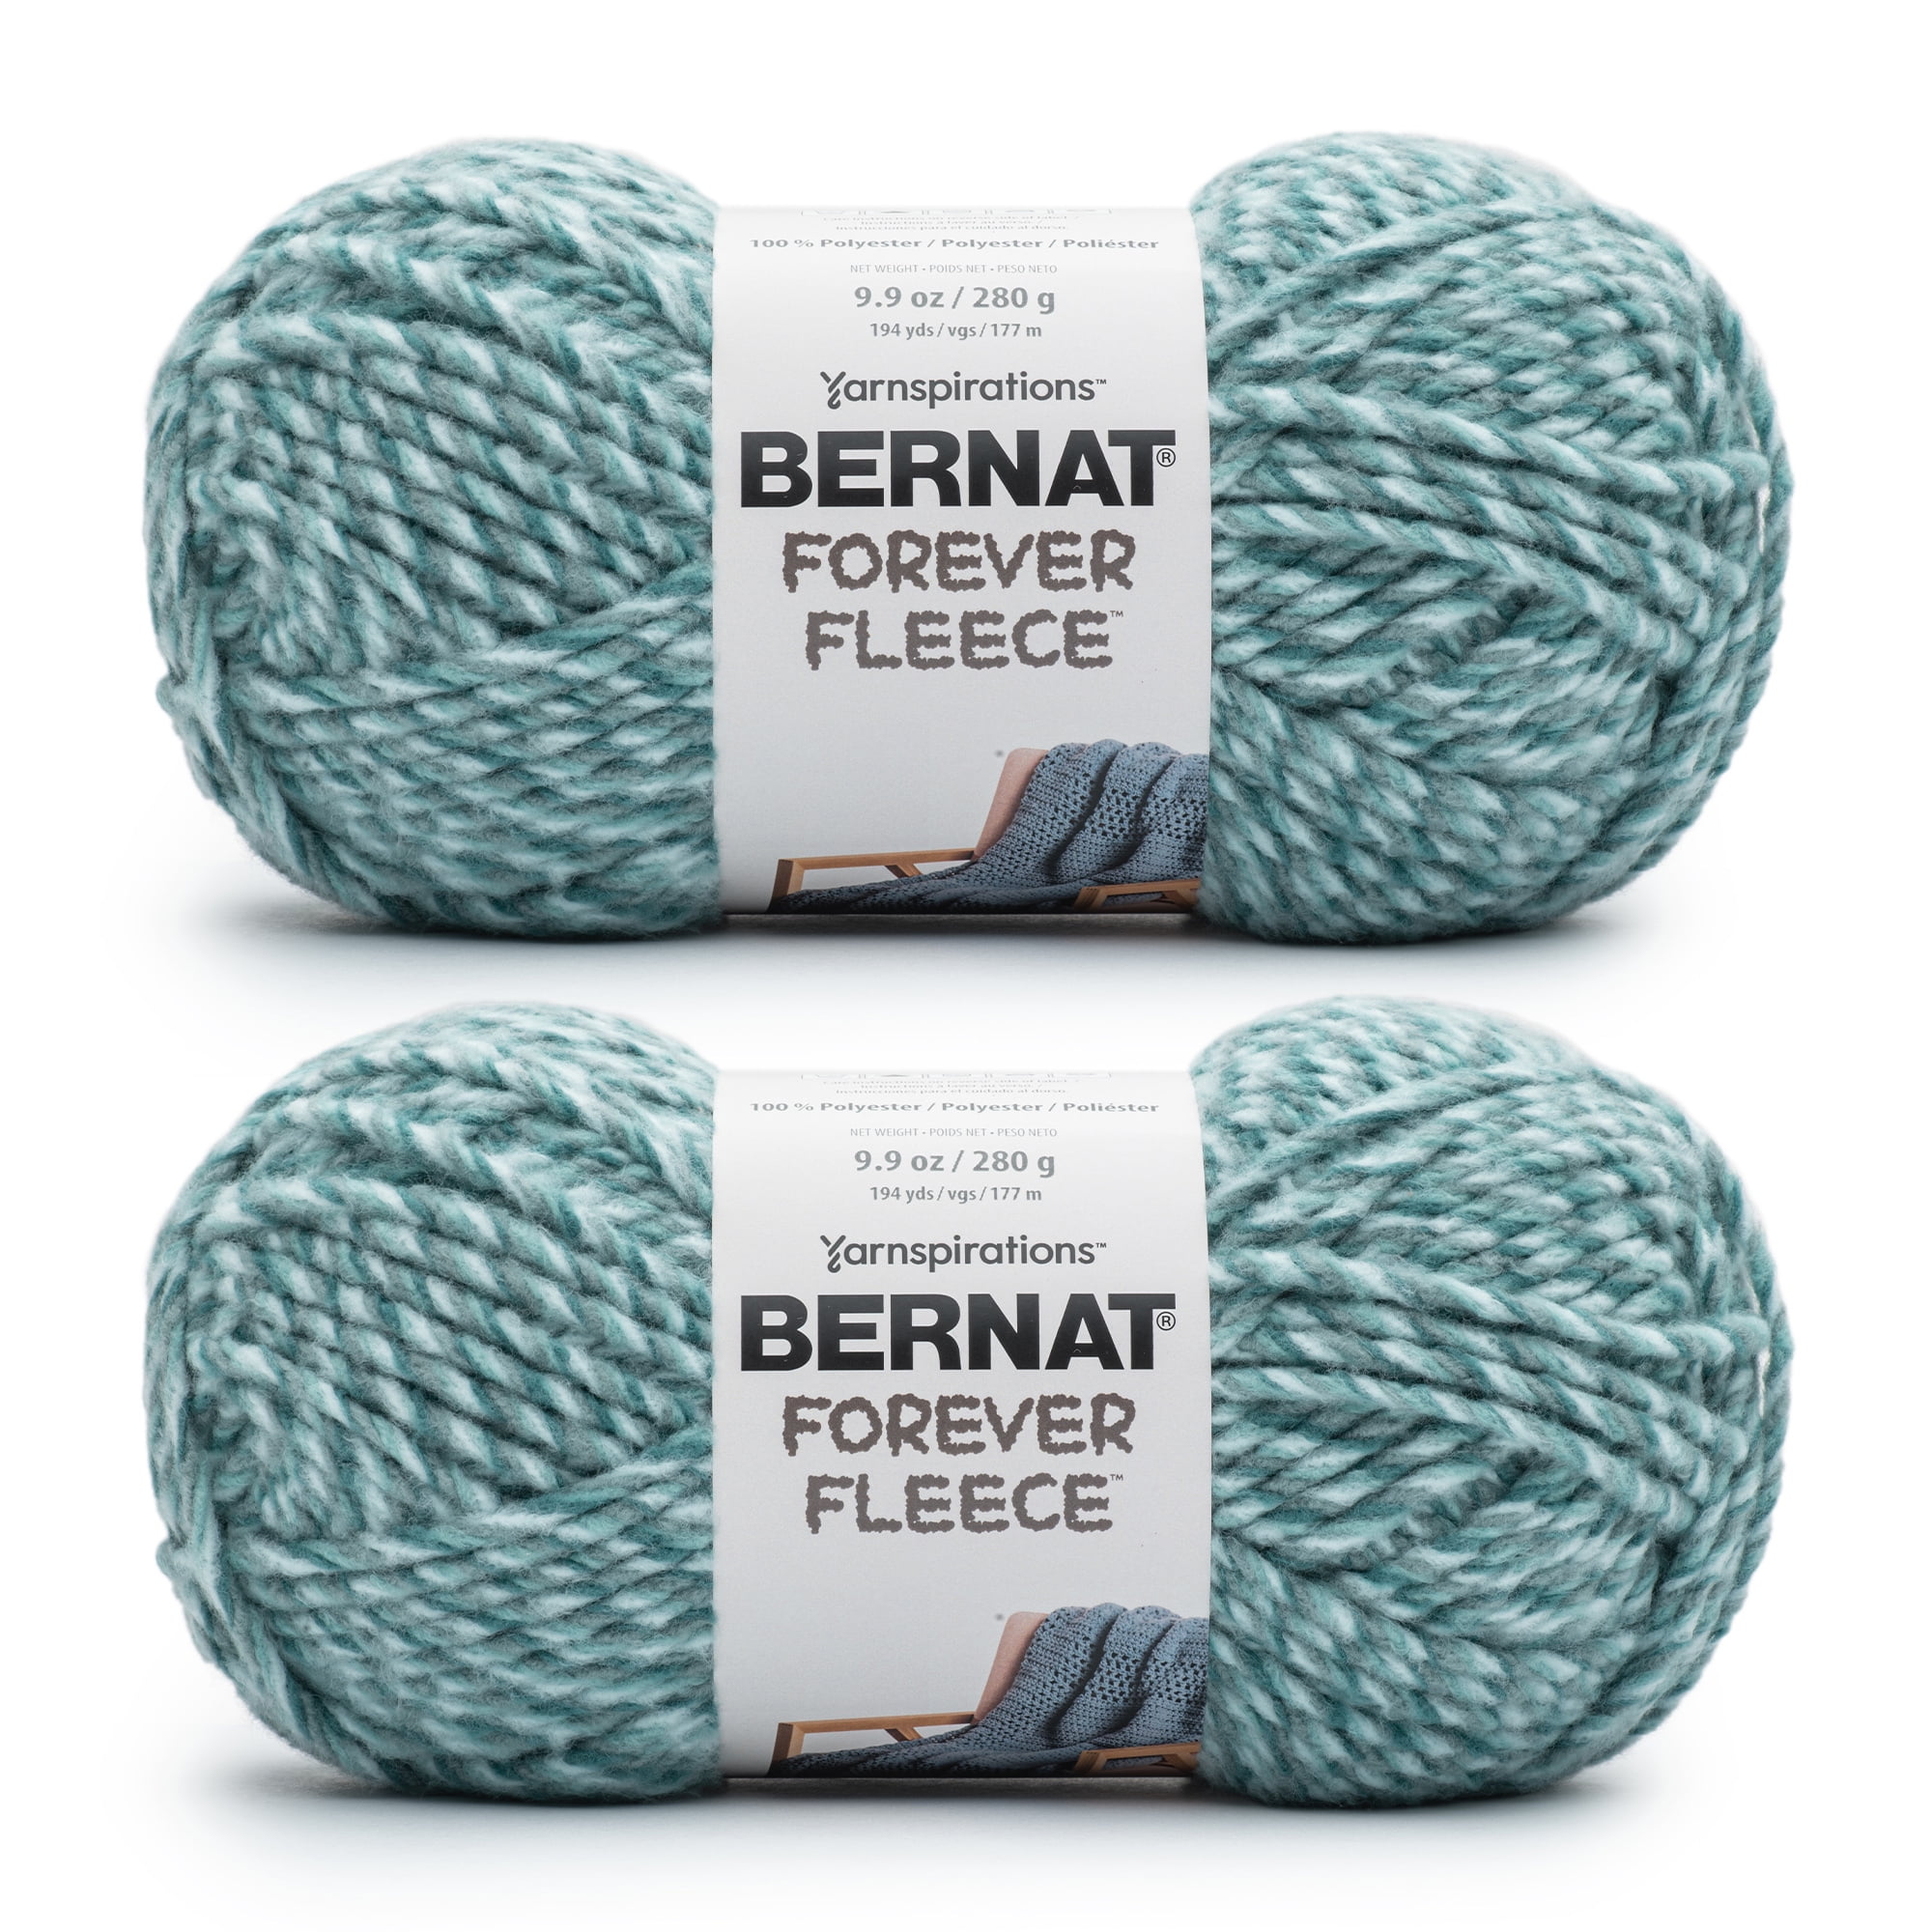 Introducing Bernat Forever Fleece